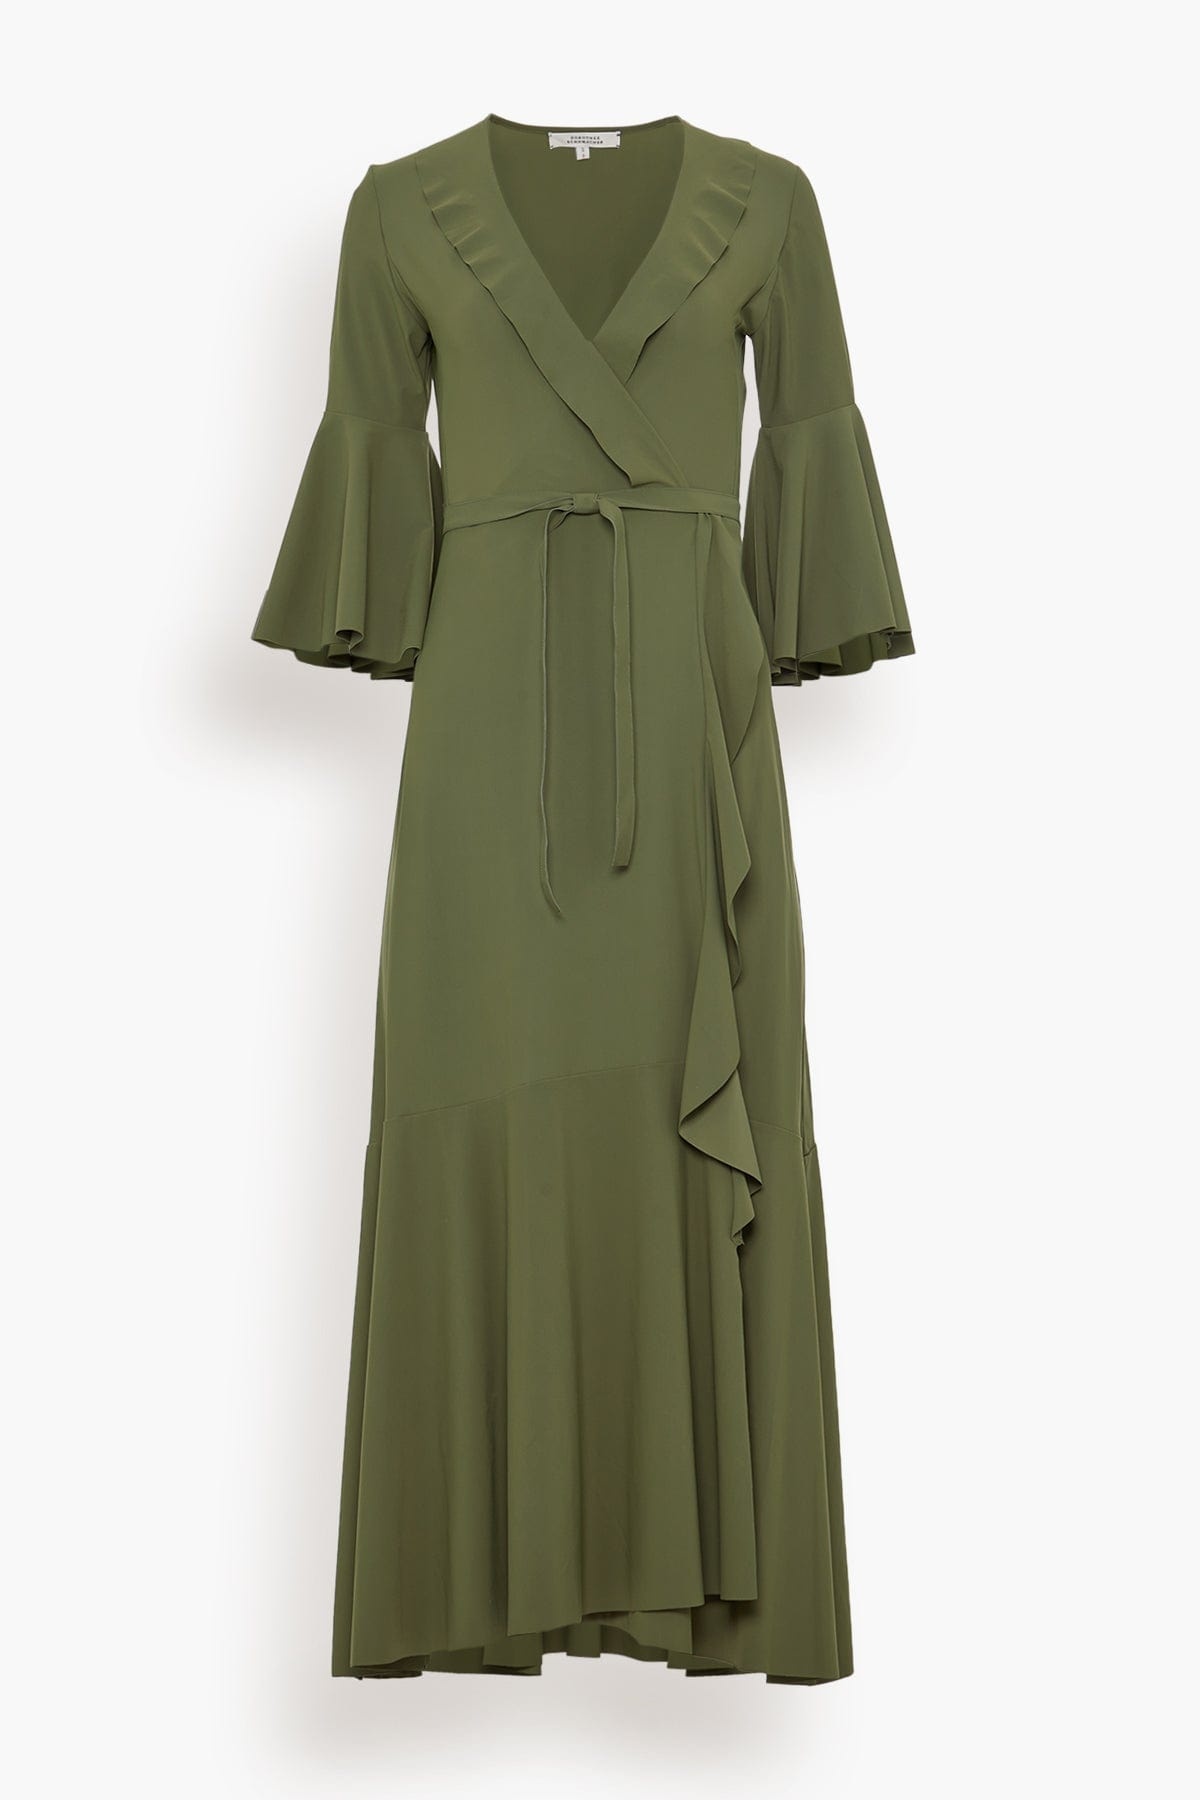 Daily Beach Dress in Dark Olive Green - 1